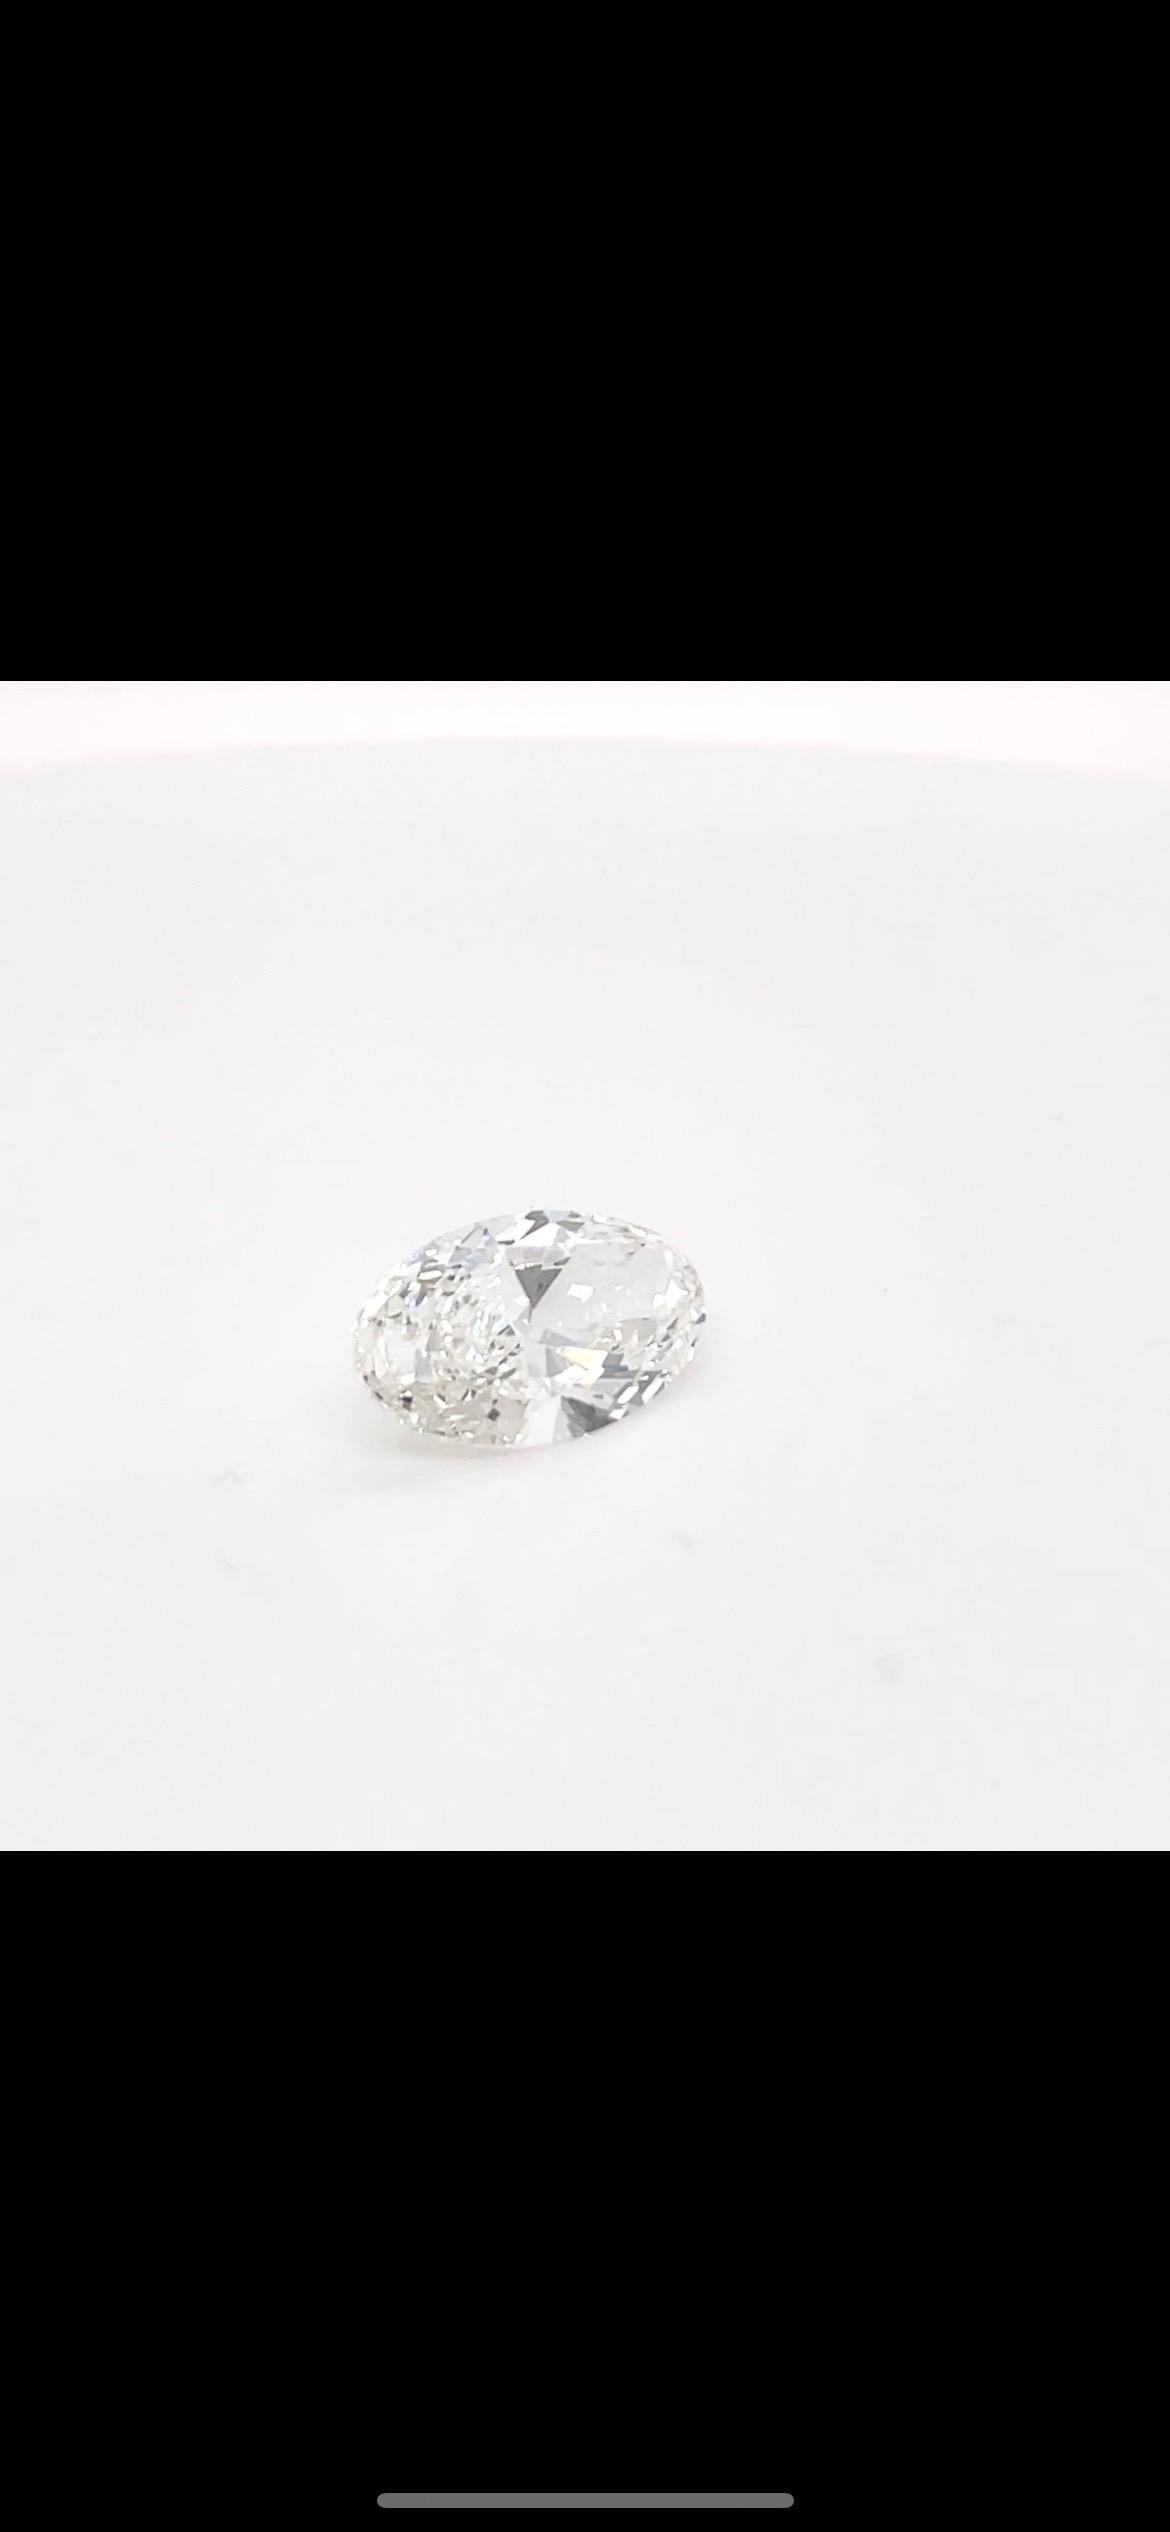 spread diamond engagement ring